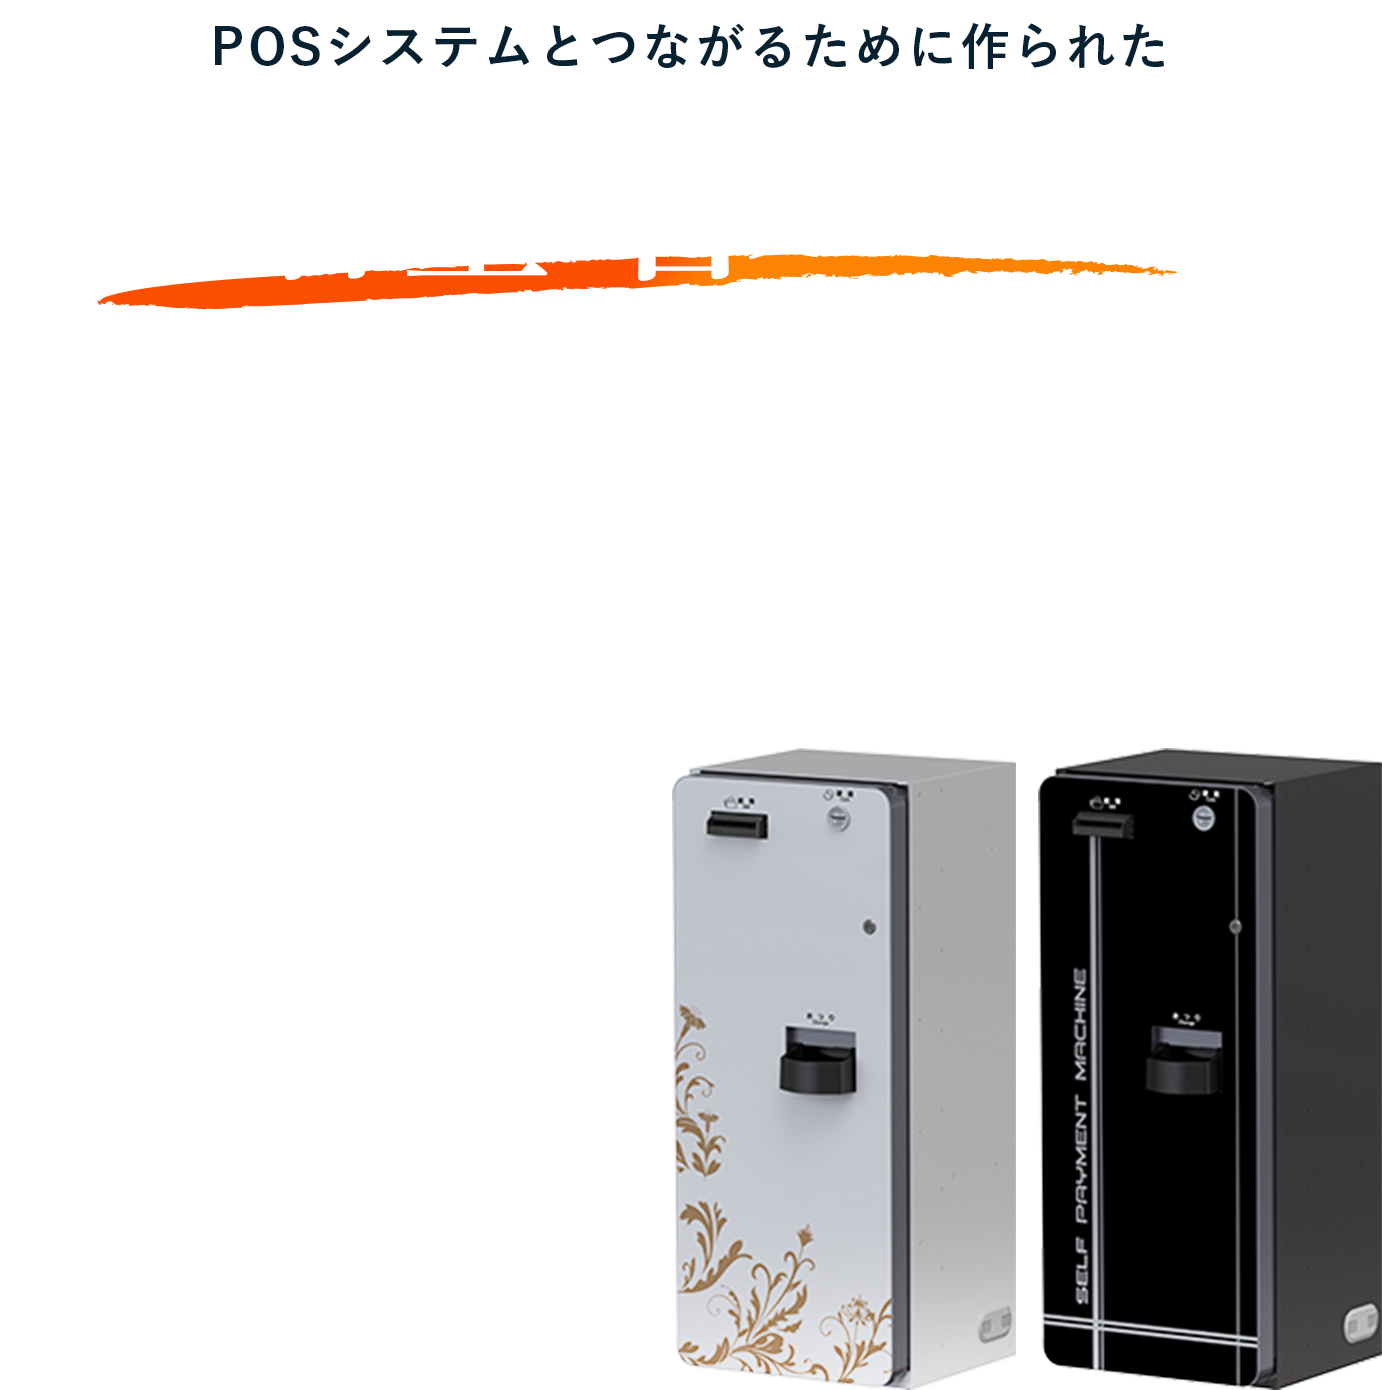 POSシステムとつながるために作られた 大容量・省スペースな自動釣銭機 ARUNAS AES-CBPM